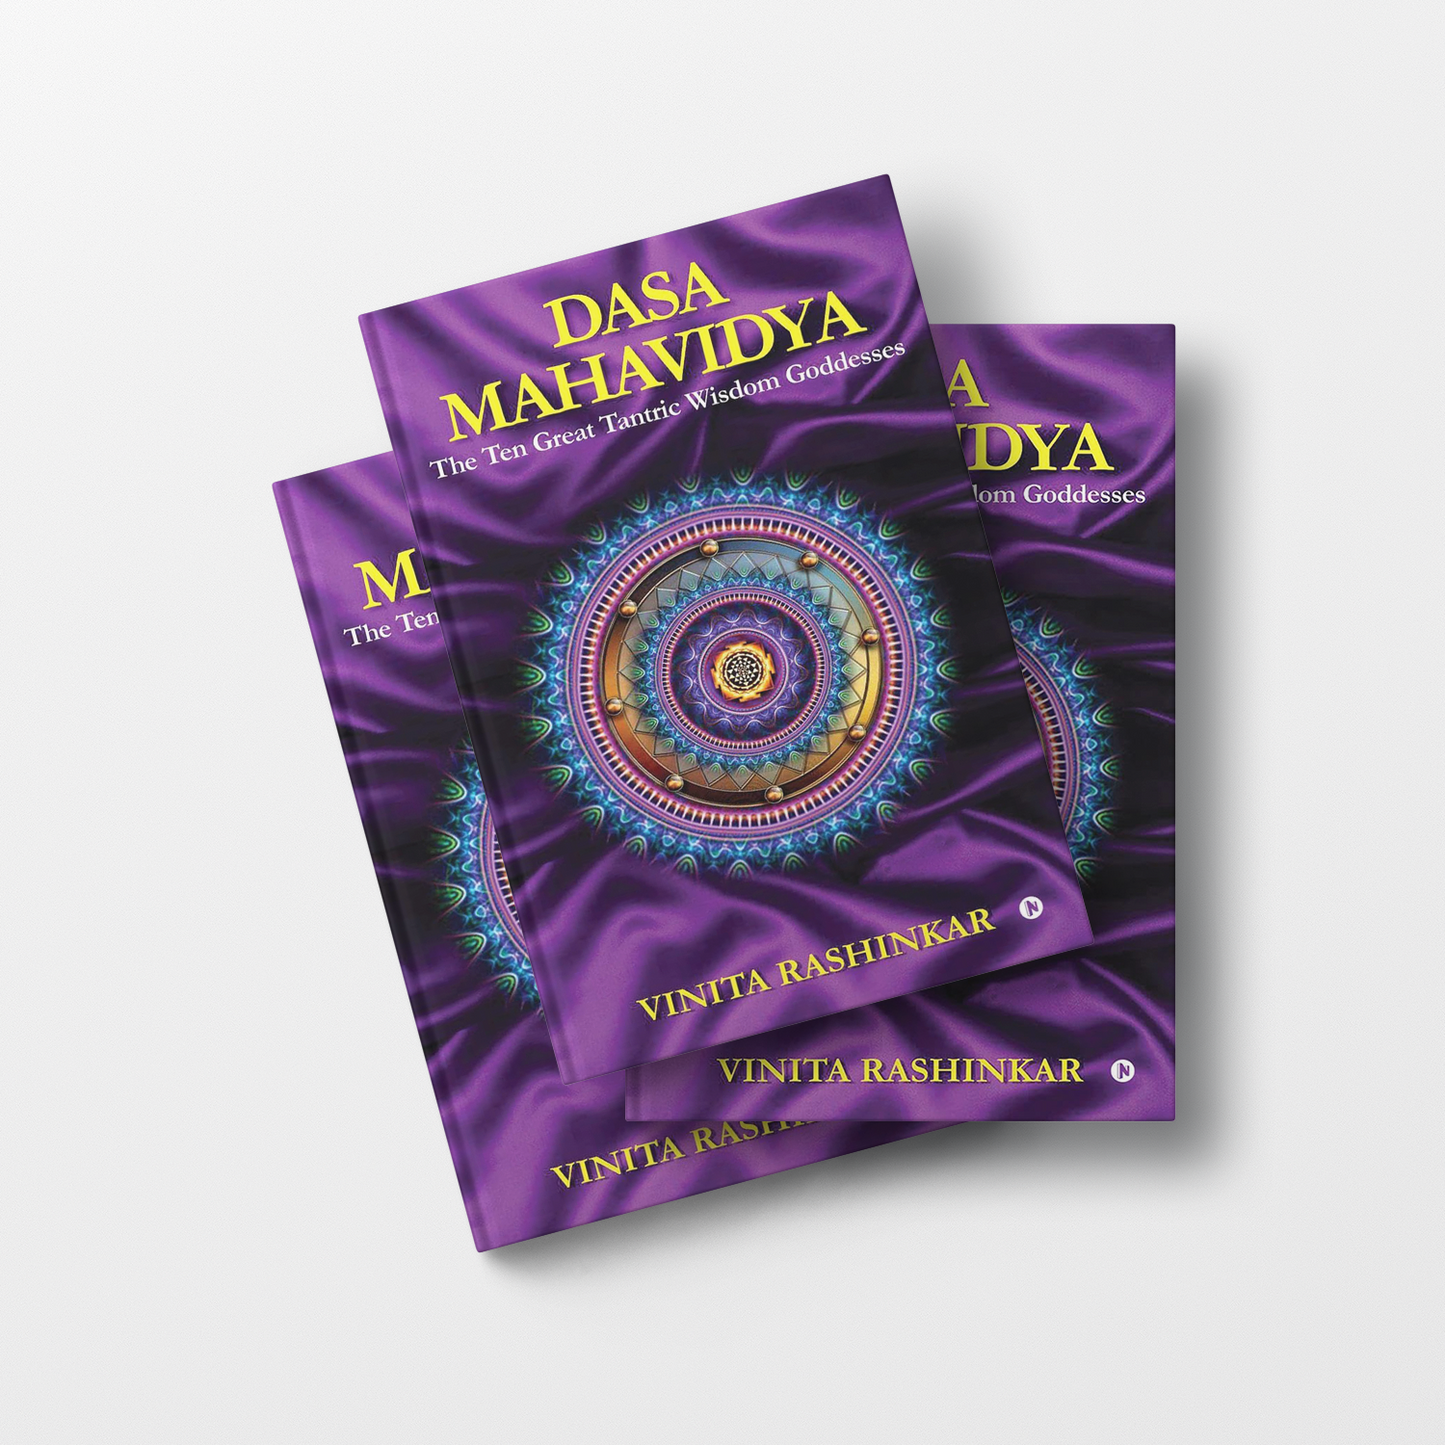 Dasa Mahavidya - The Ten Great Tantric Wisdom Goddesses